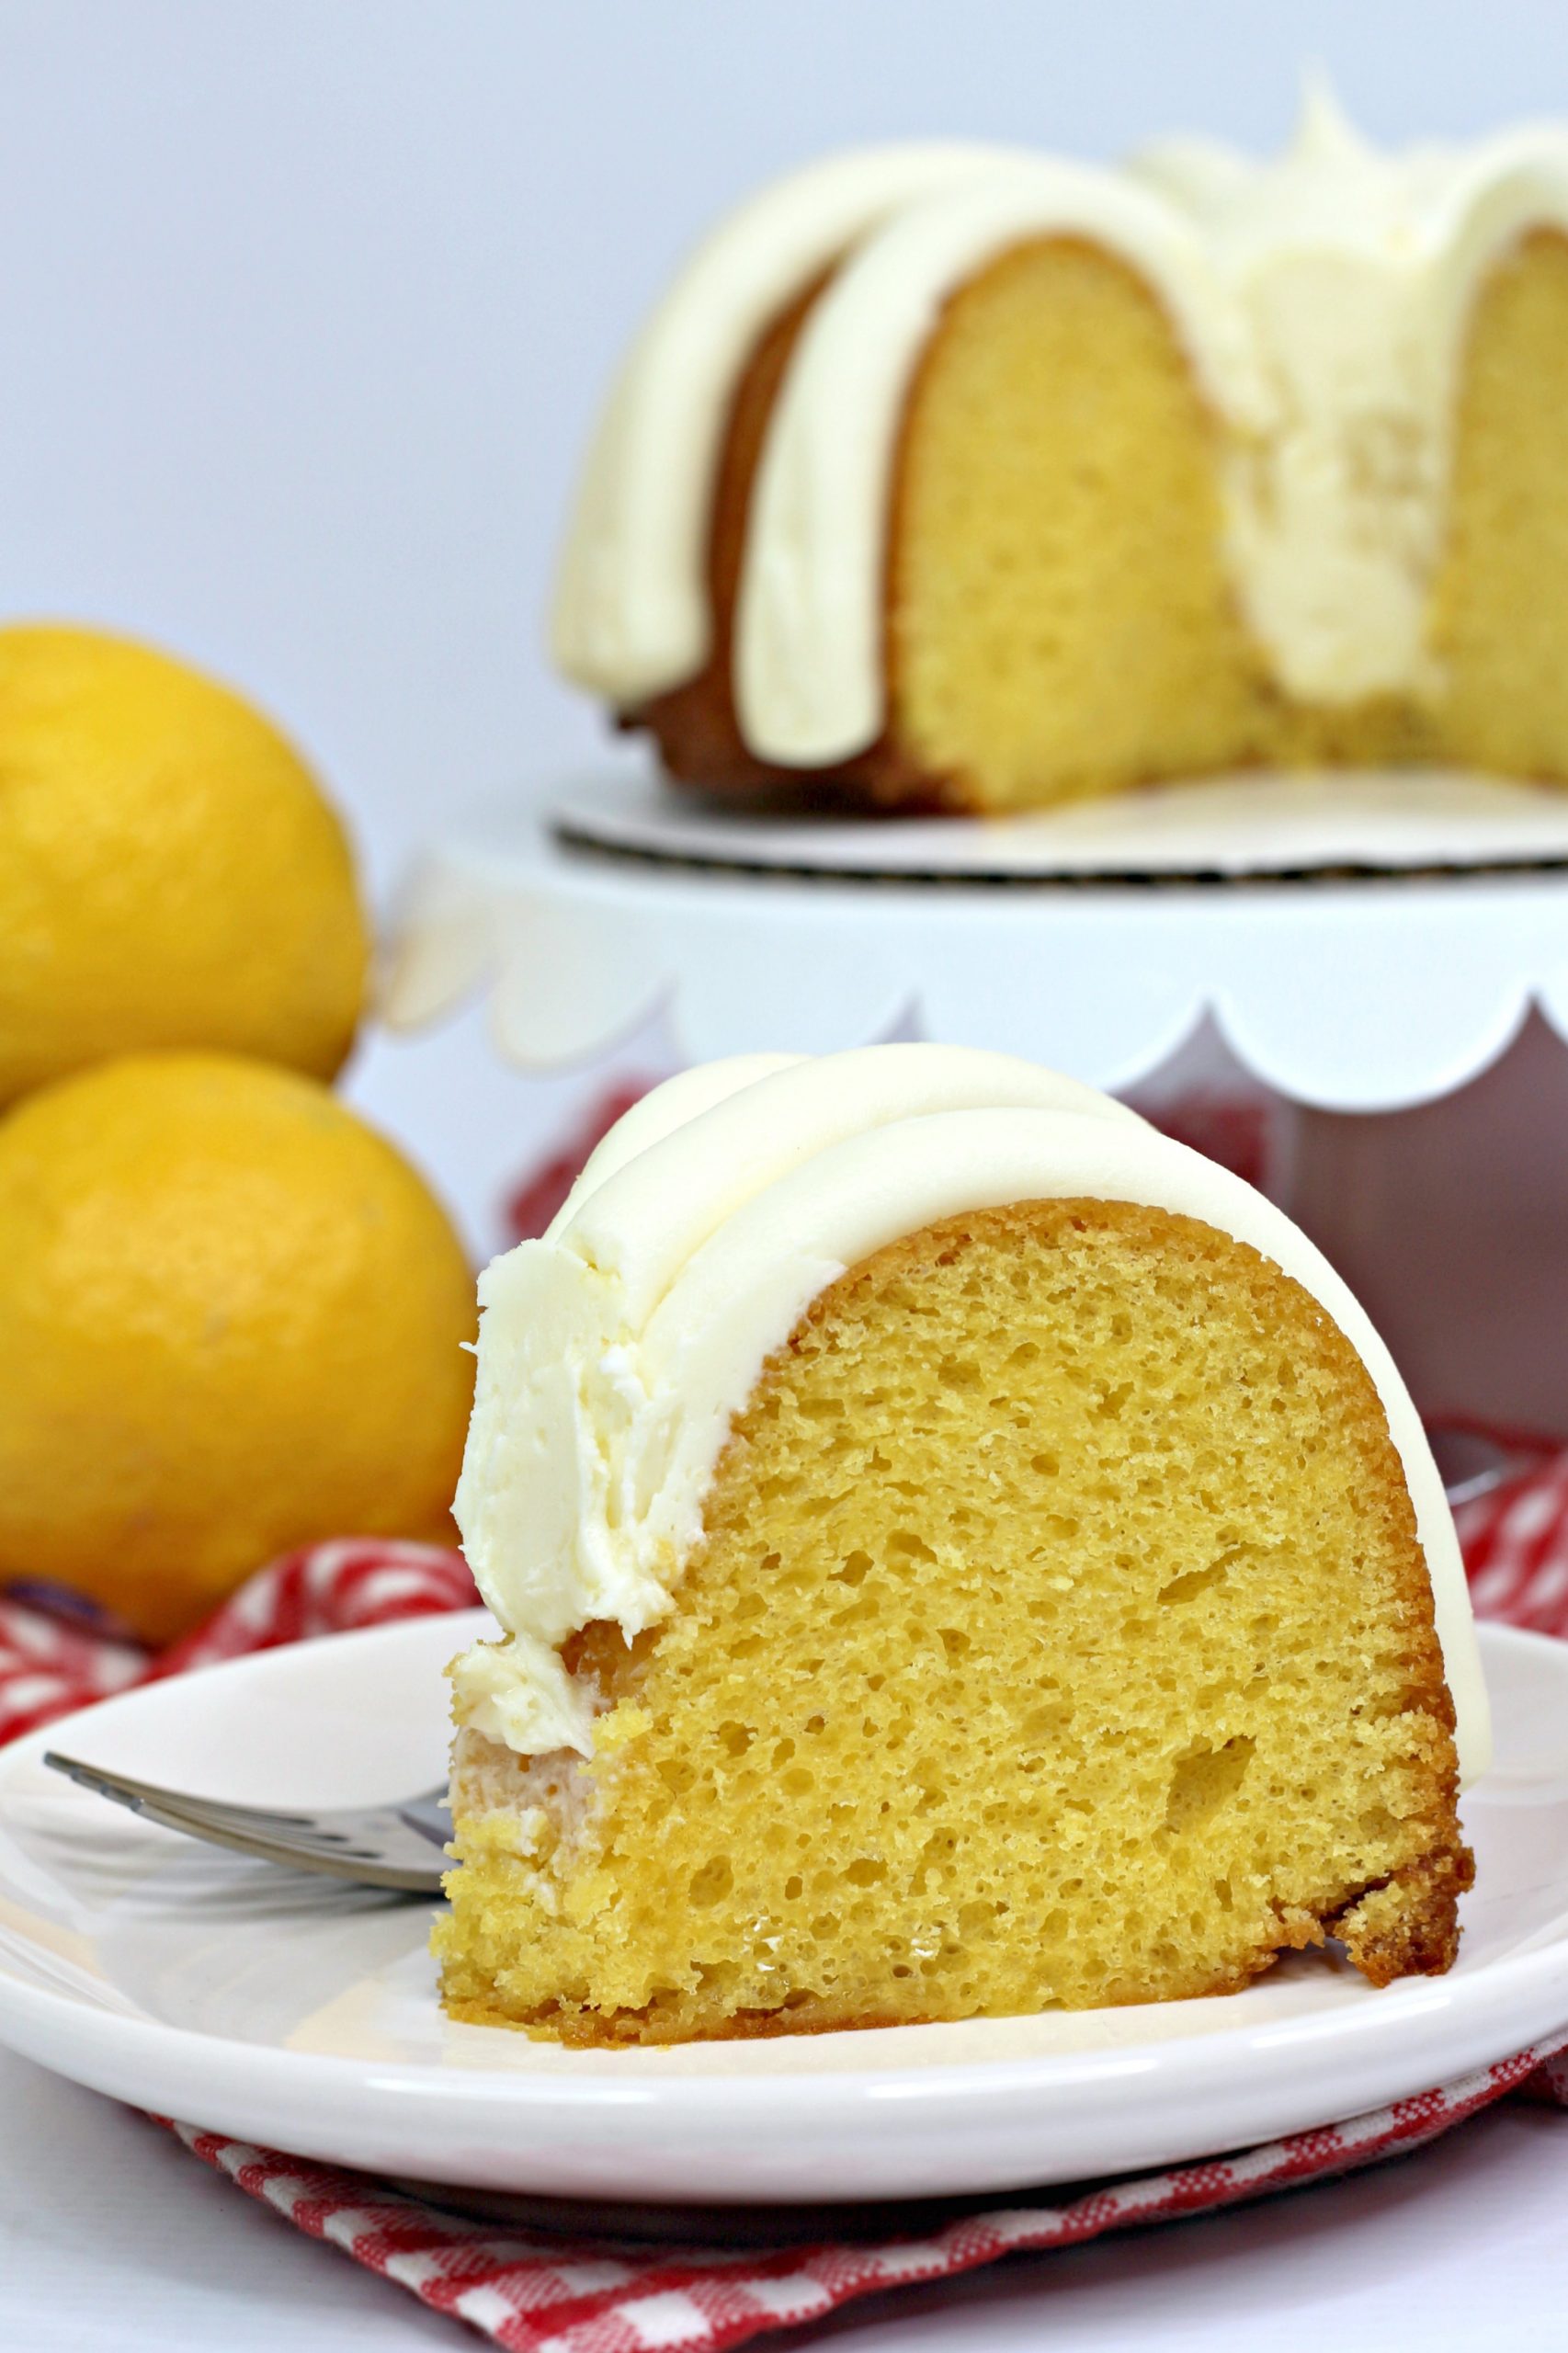 http://fromgatetoplate.com/wp-content/uploads/2021/02/Lemon-Bundt-Cake-1-1-scaled.jpg